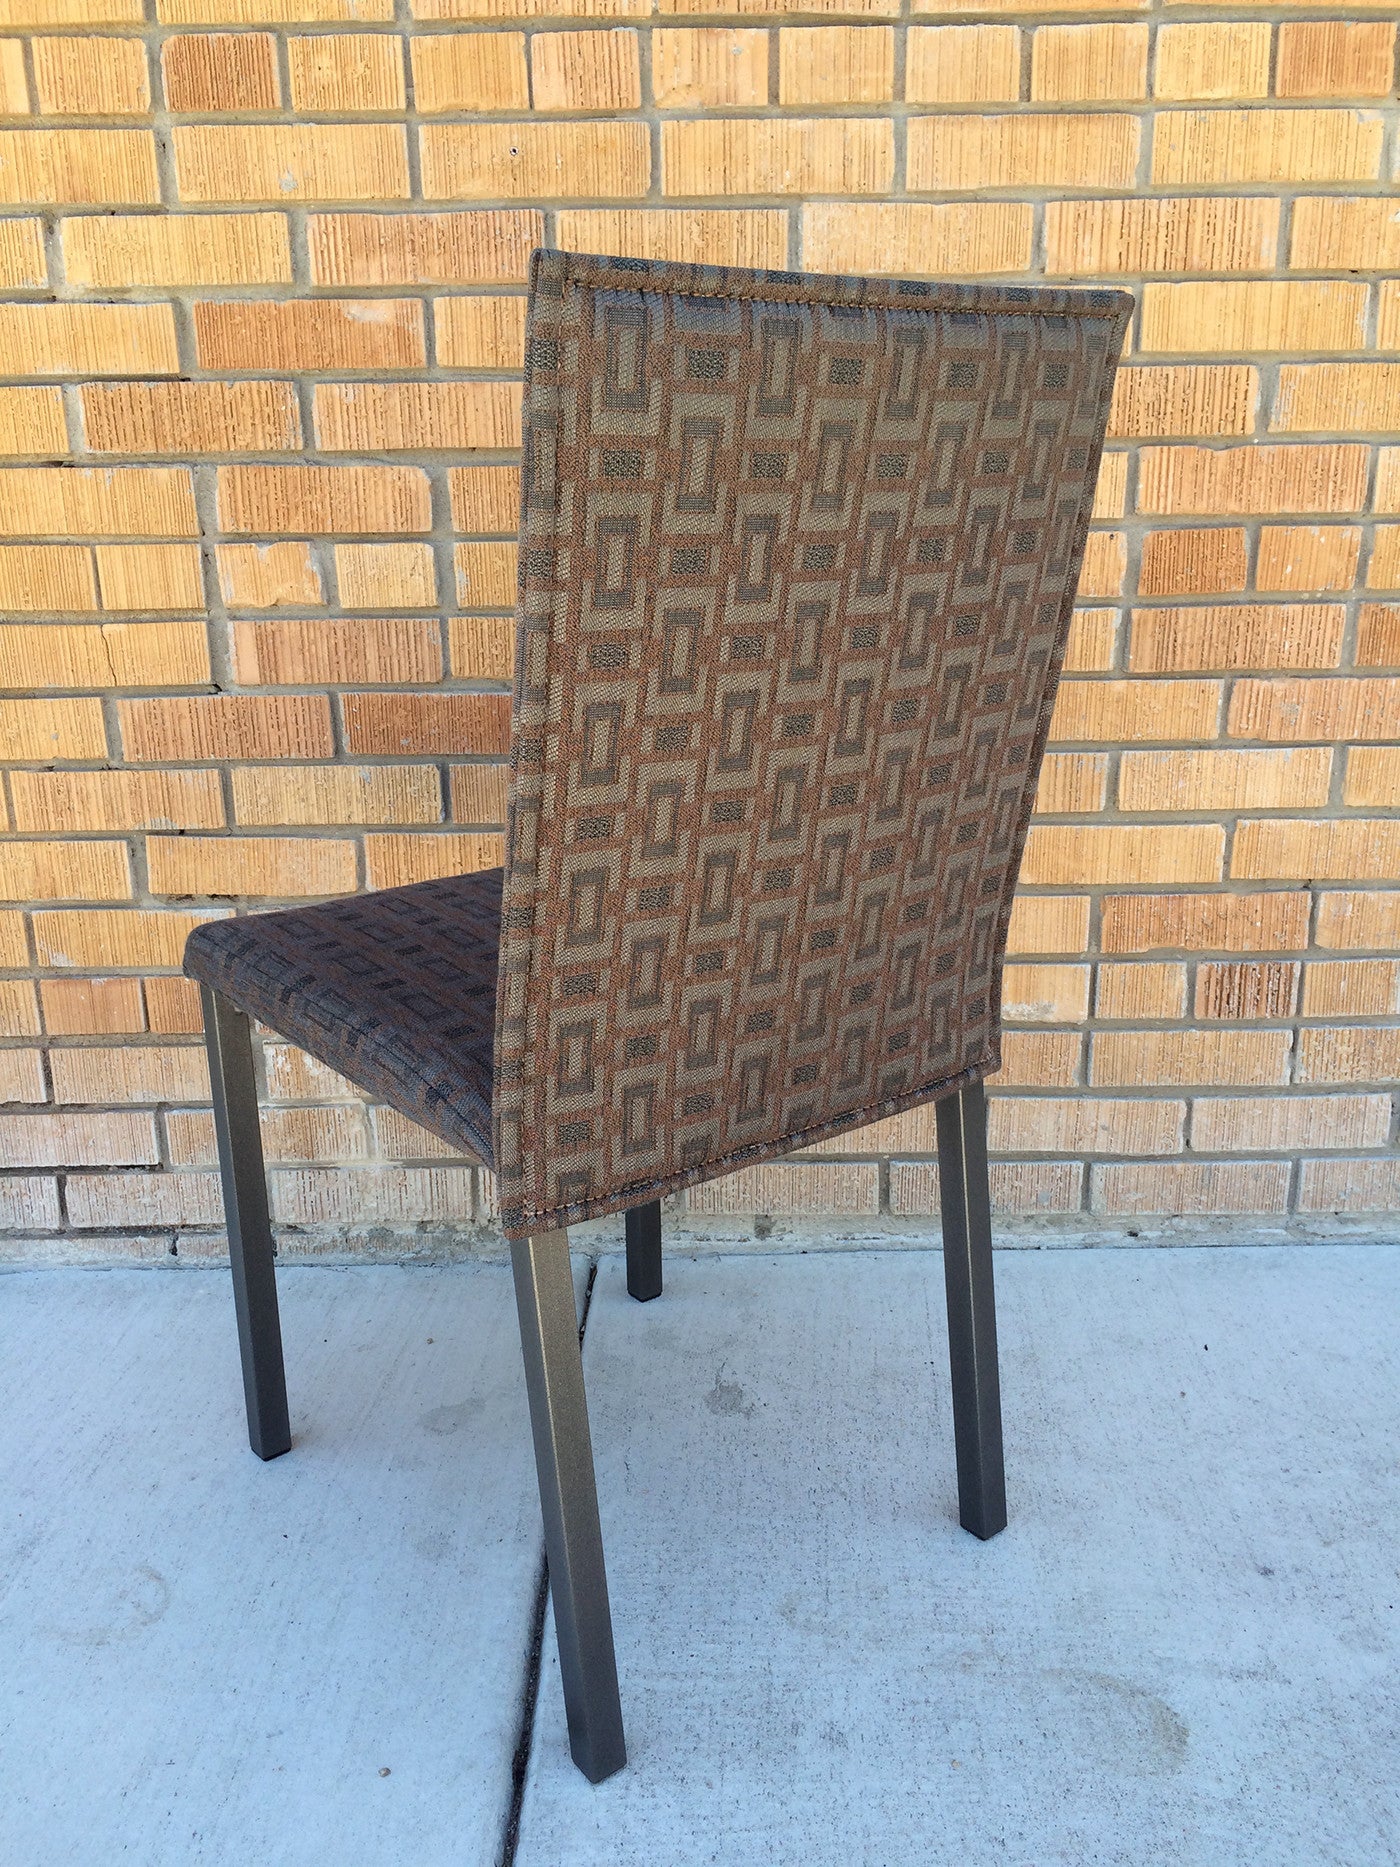 Quadrato Chair